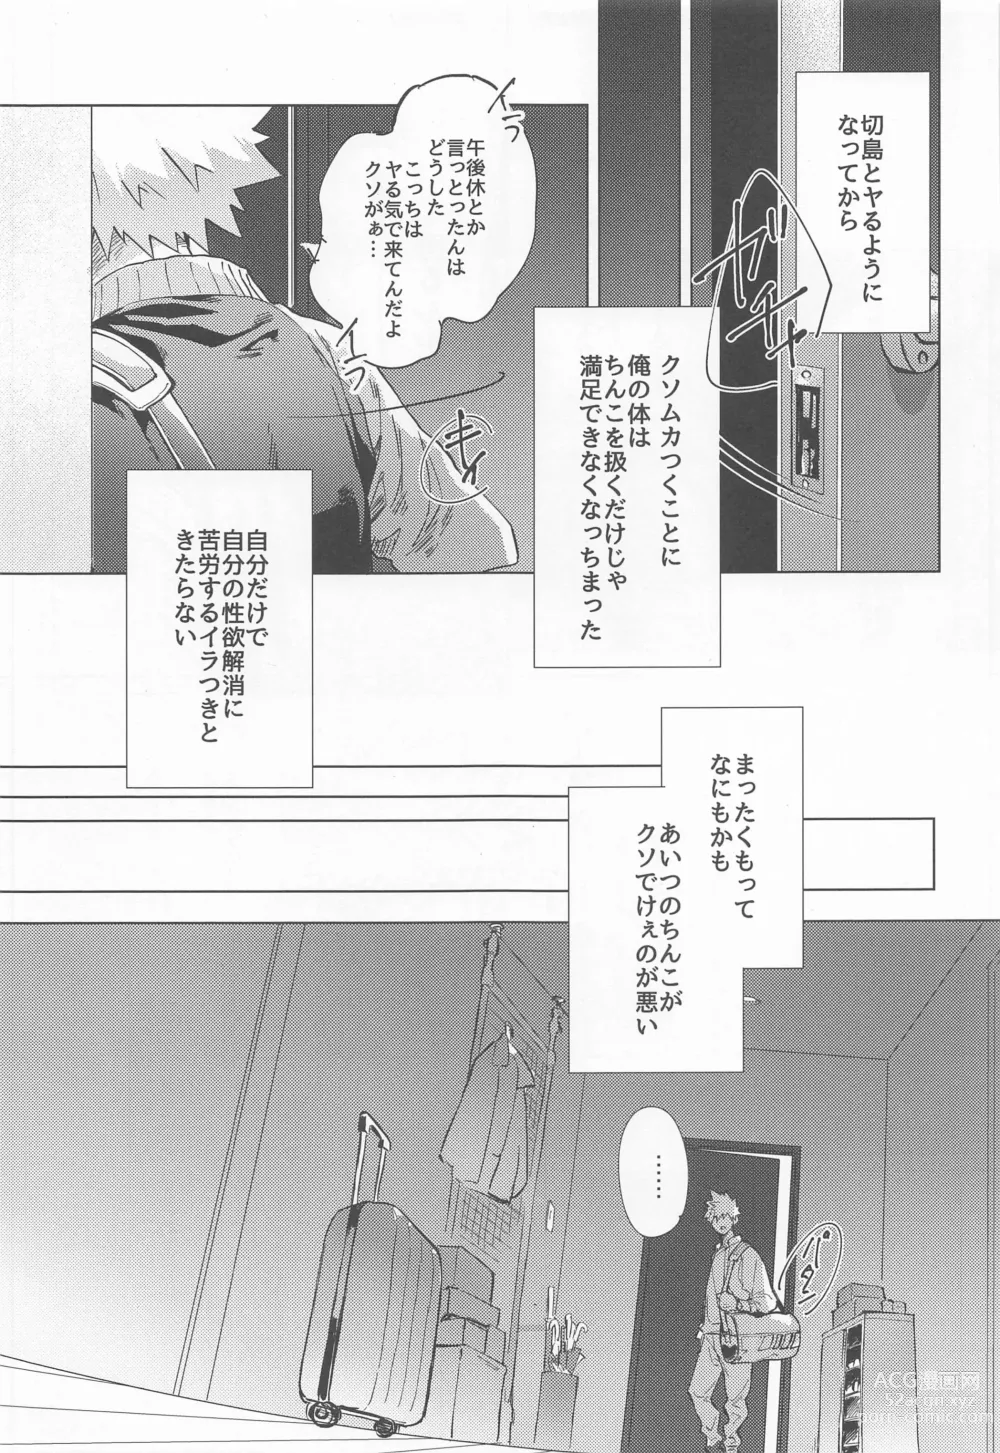 Page 4 of doujinshi Oppai Nonde Nenneshite